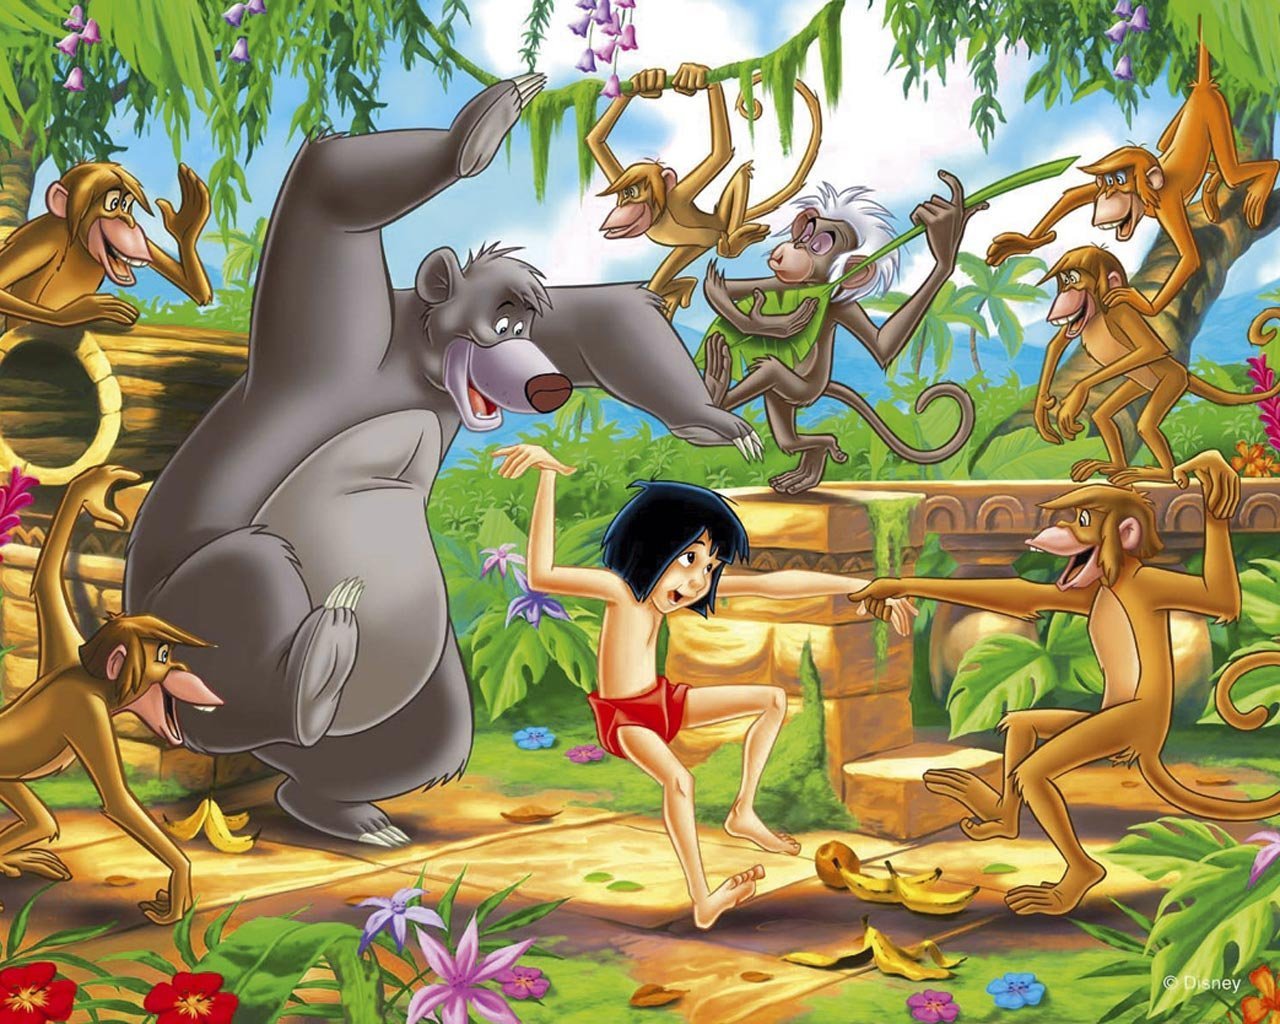 Disney images The Jungle Book wallpaper photos 8175750